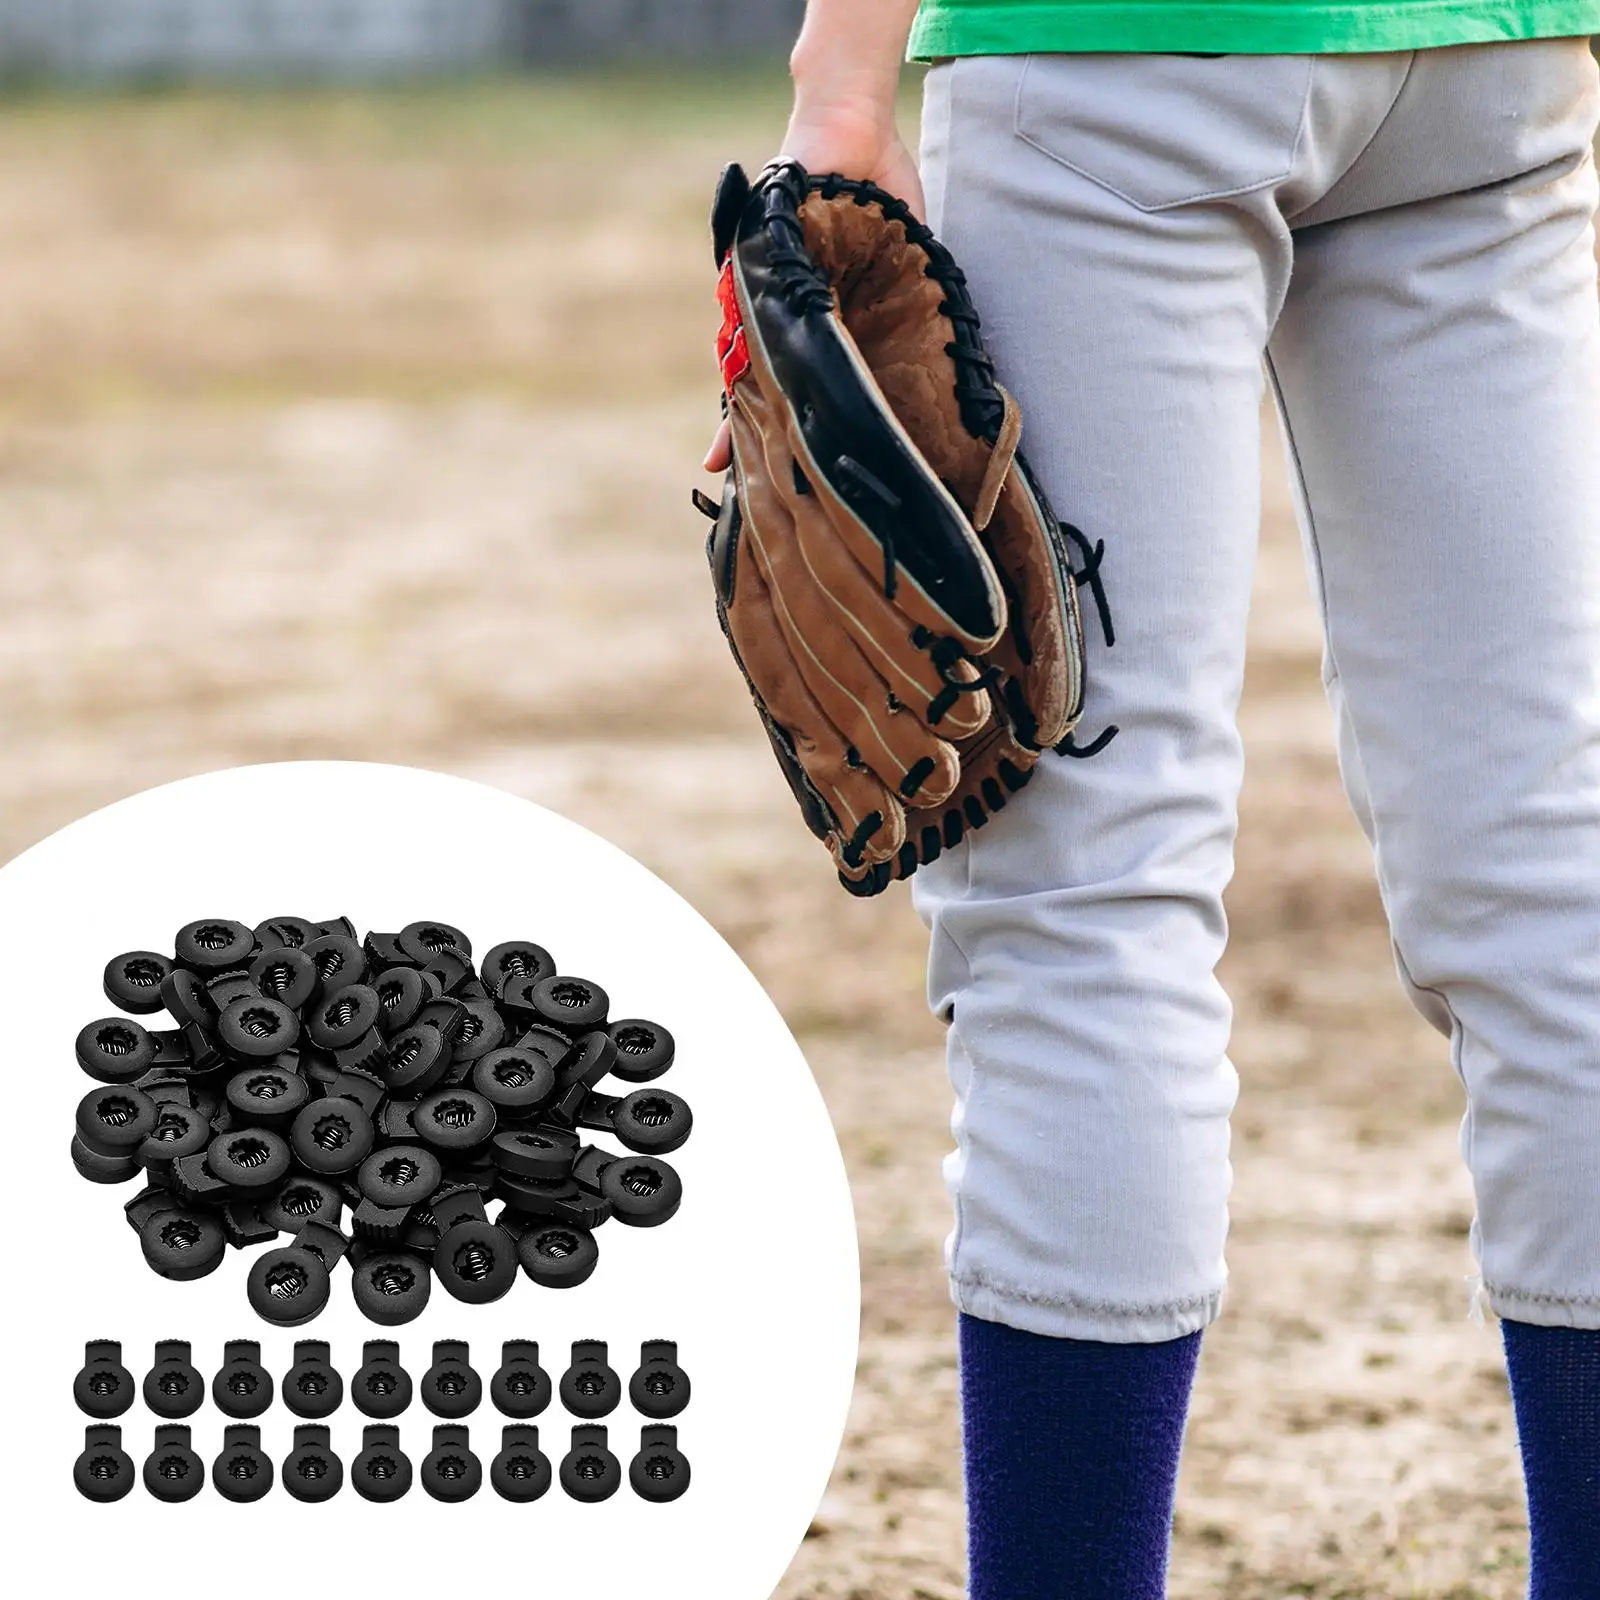 48x Durable Baseball Glove Locks Single Holed End Spring Sliding Cord Rope Locks Toggle for Drawstrings Backpack Bags Apparel